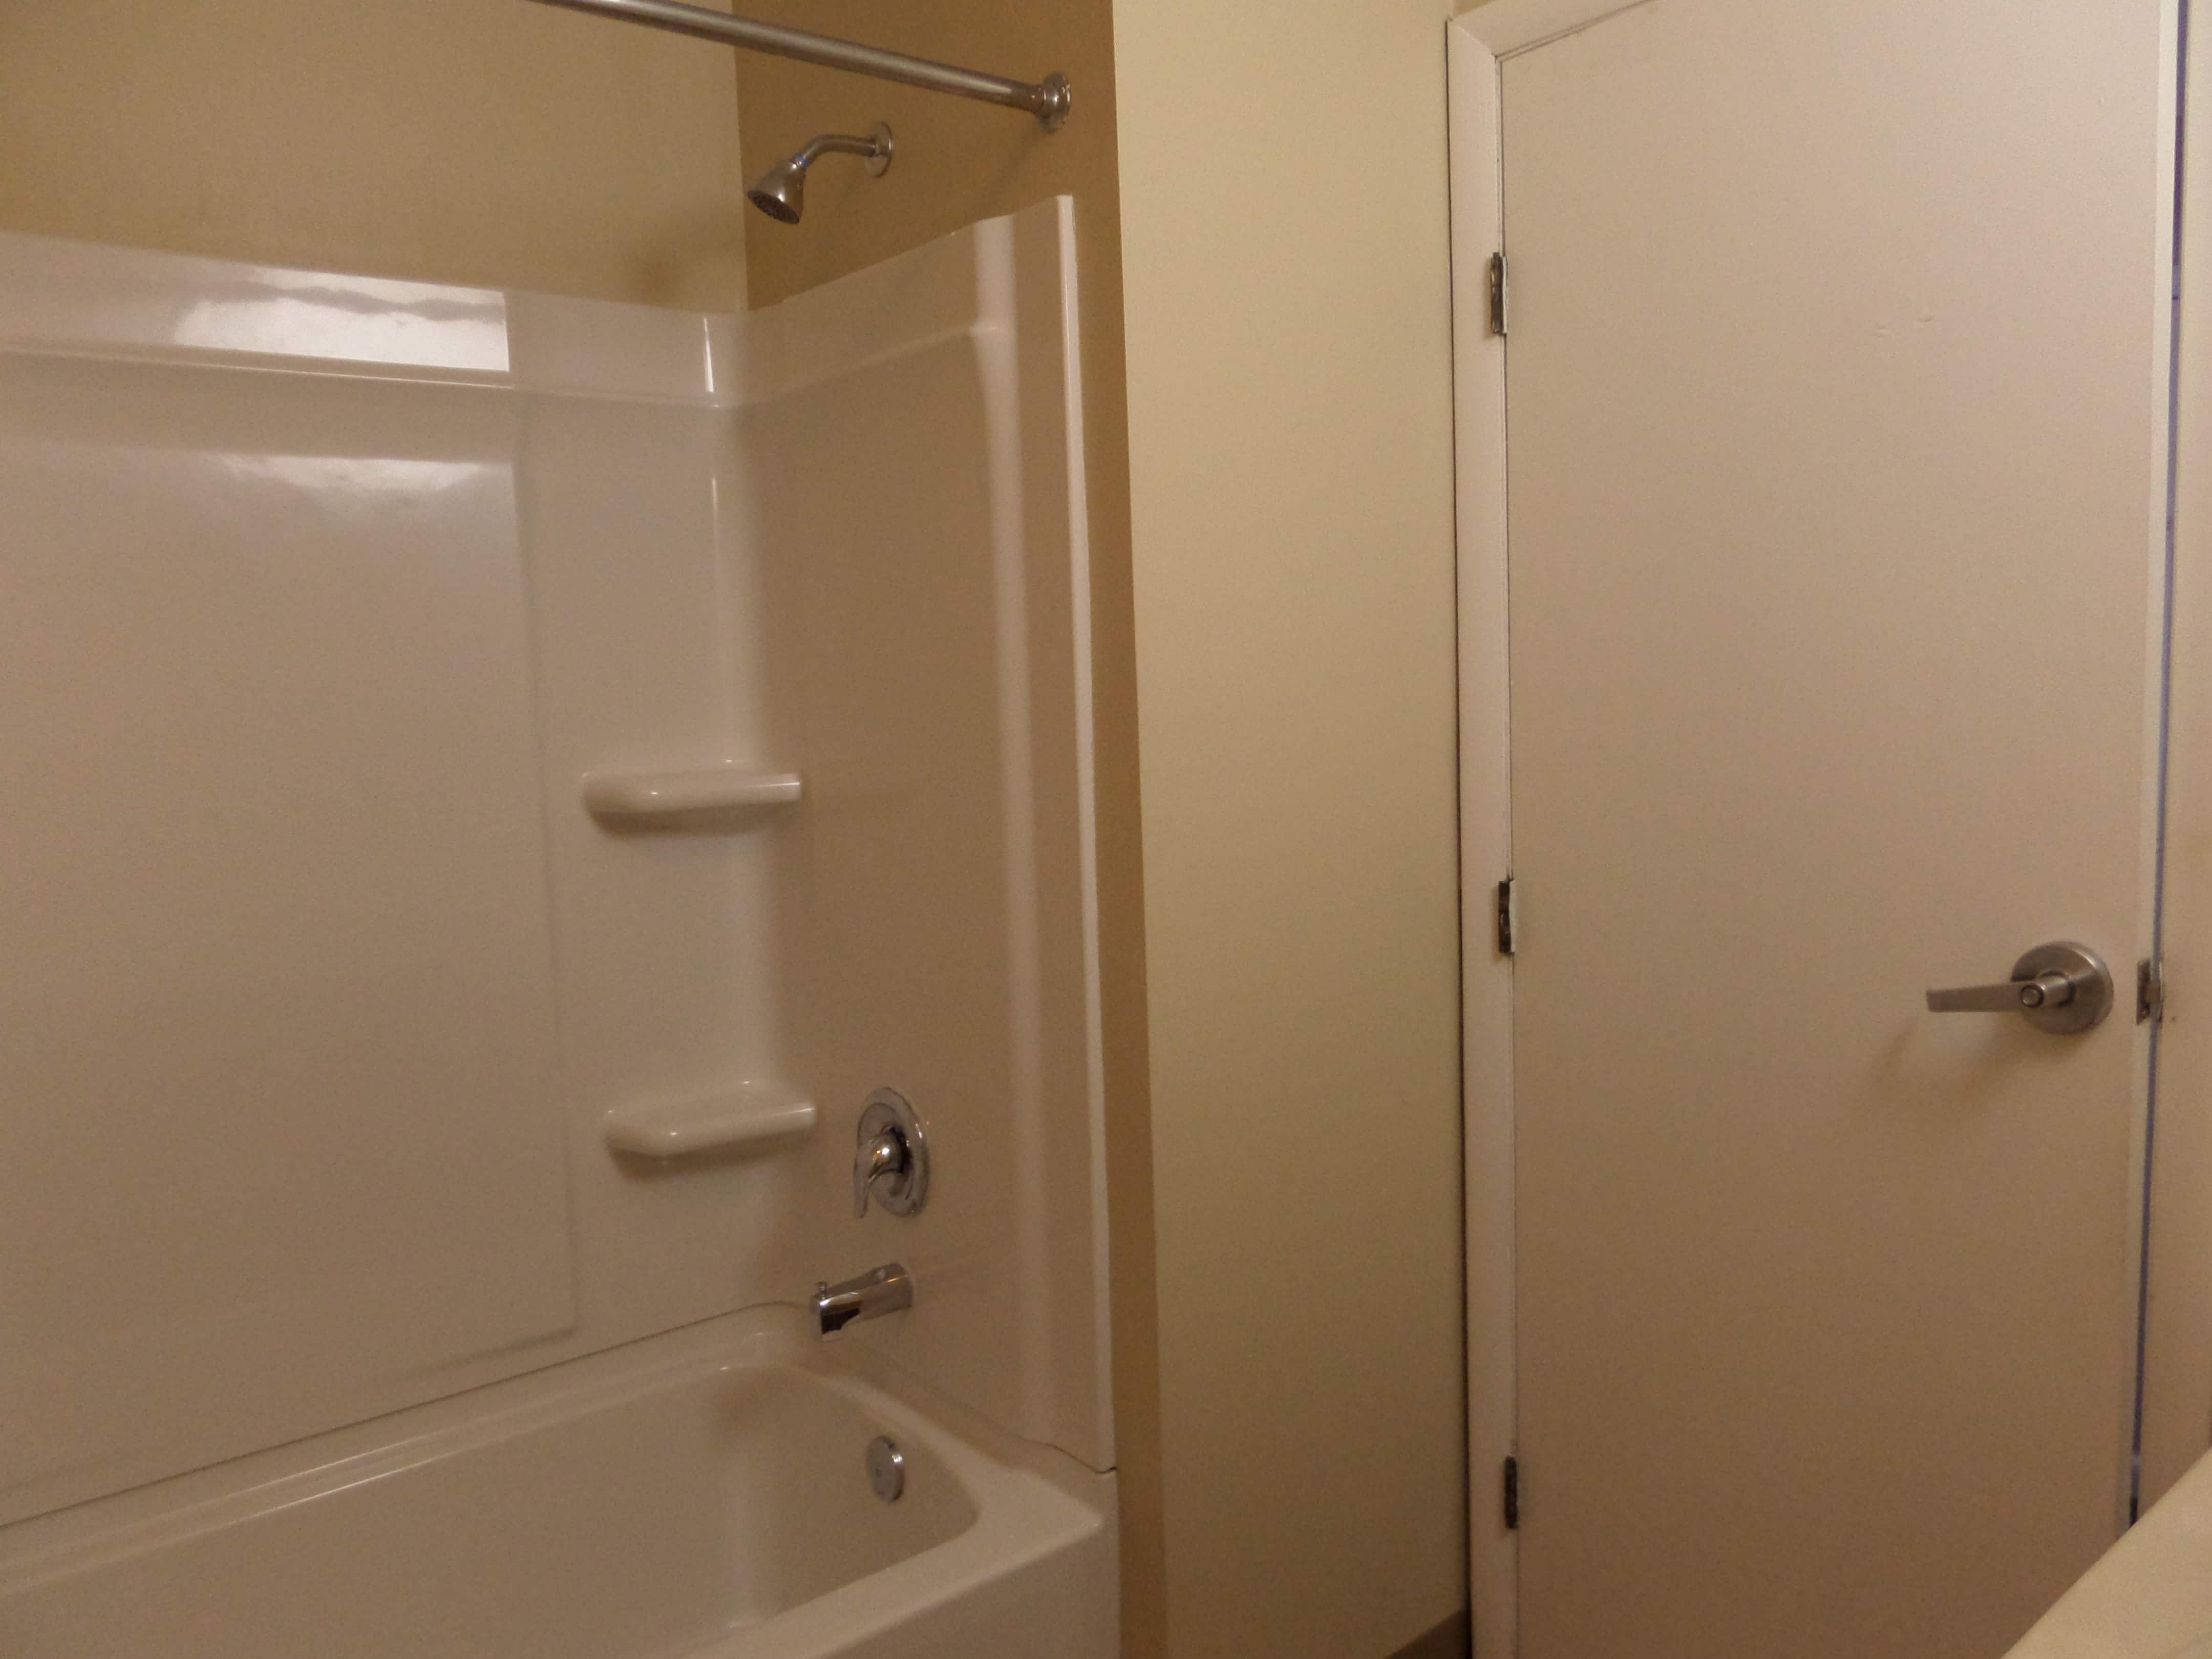 Shared bathroom has standard shower rail